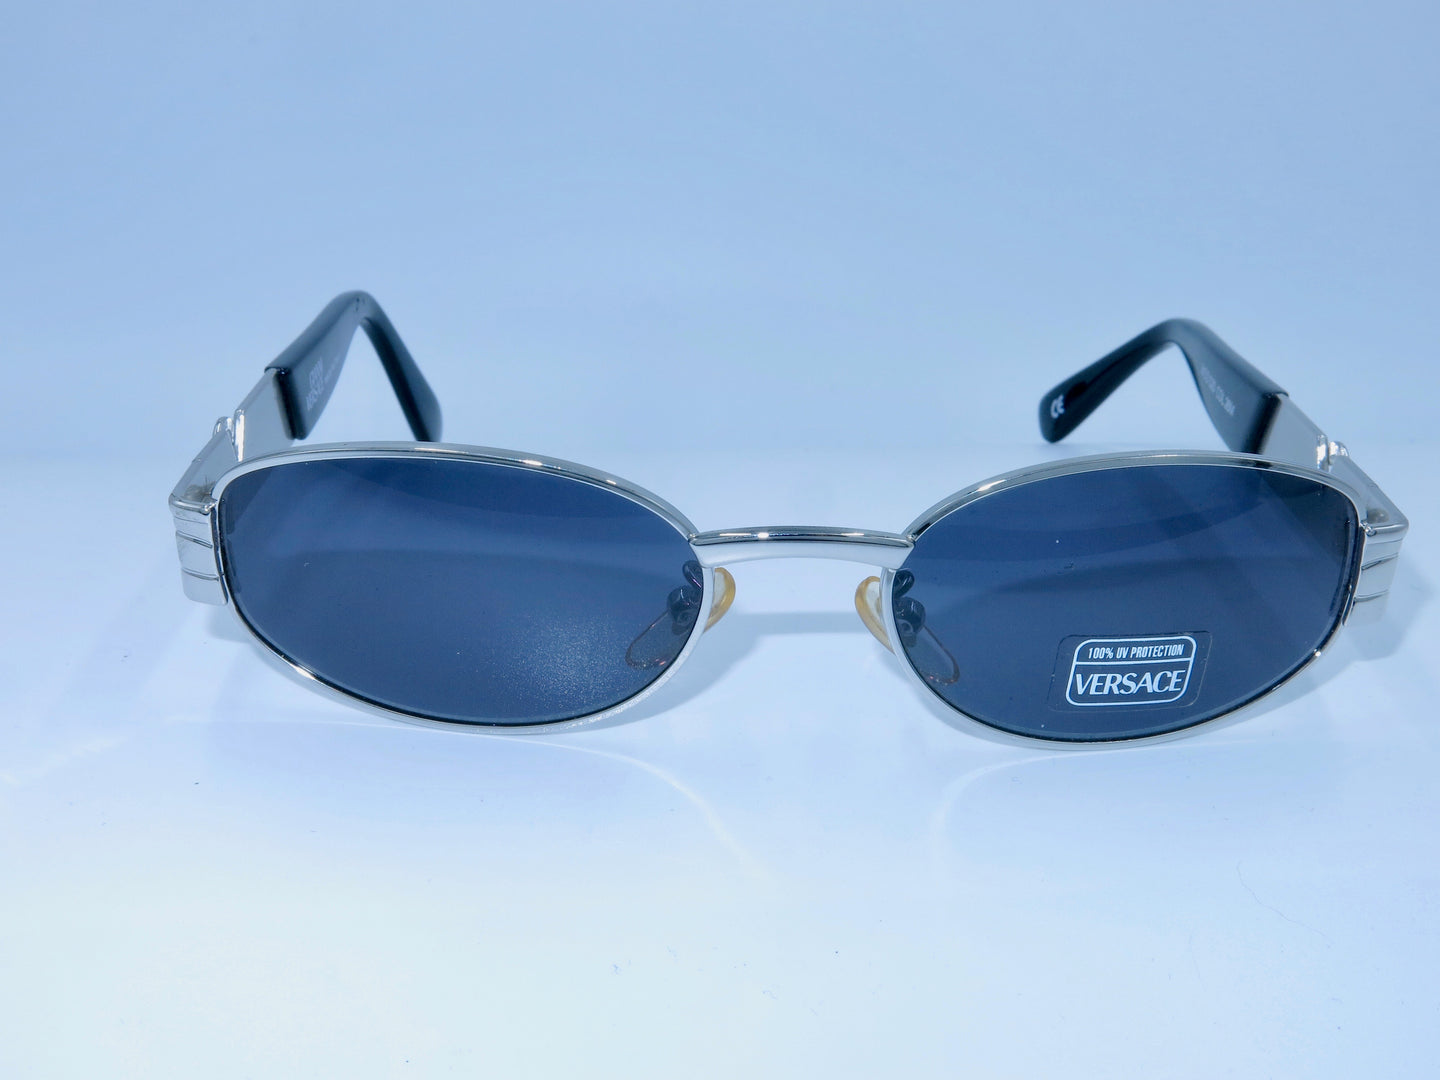 Versace Sunglasses S 20 Silver